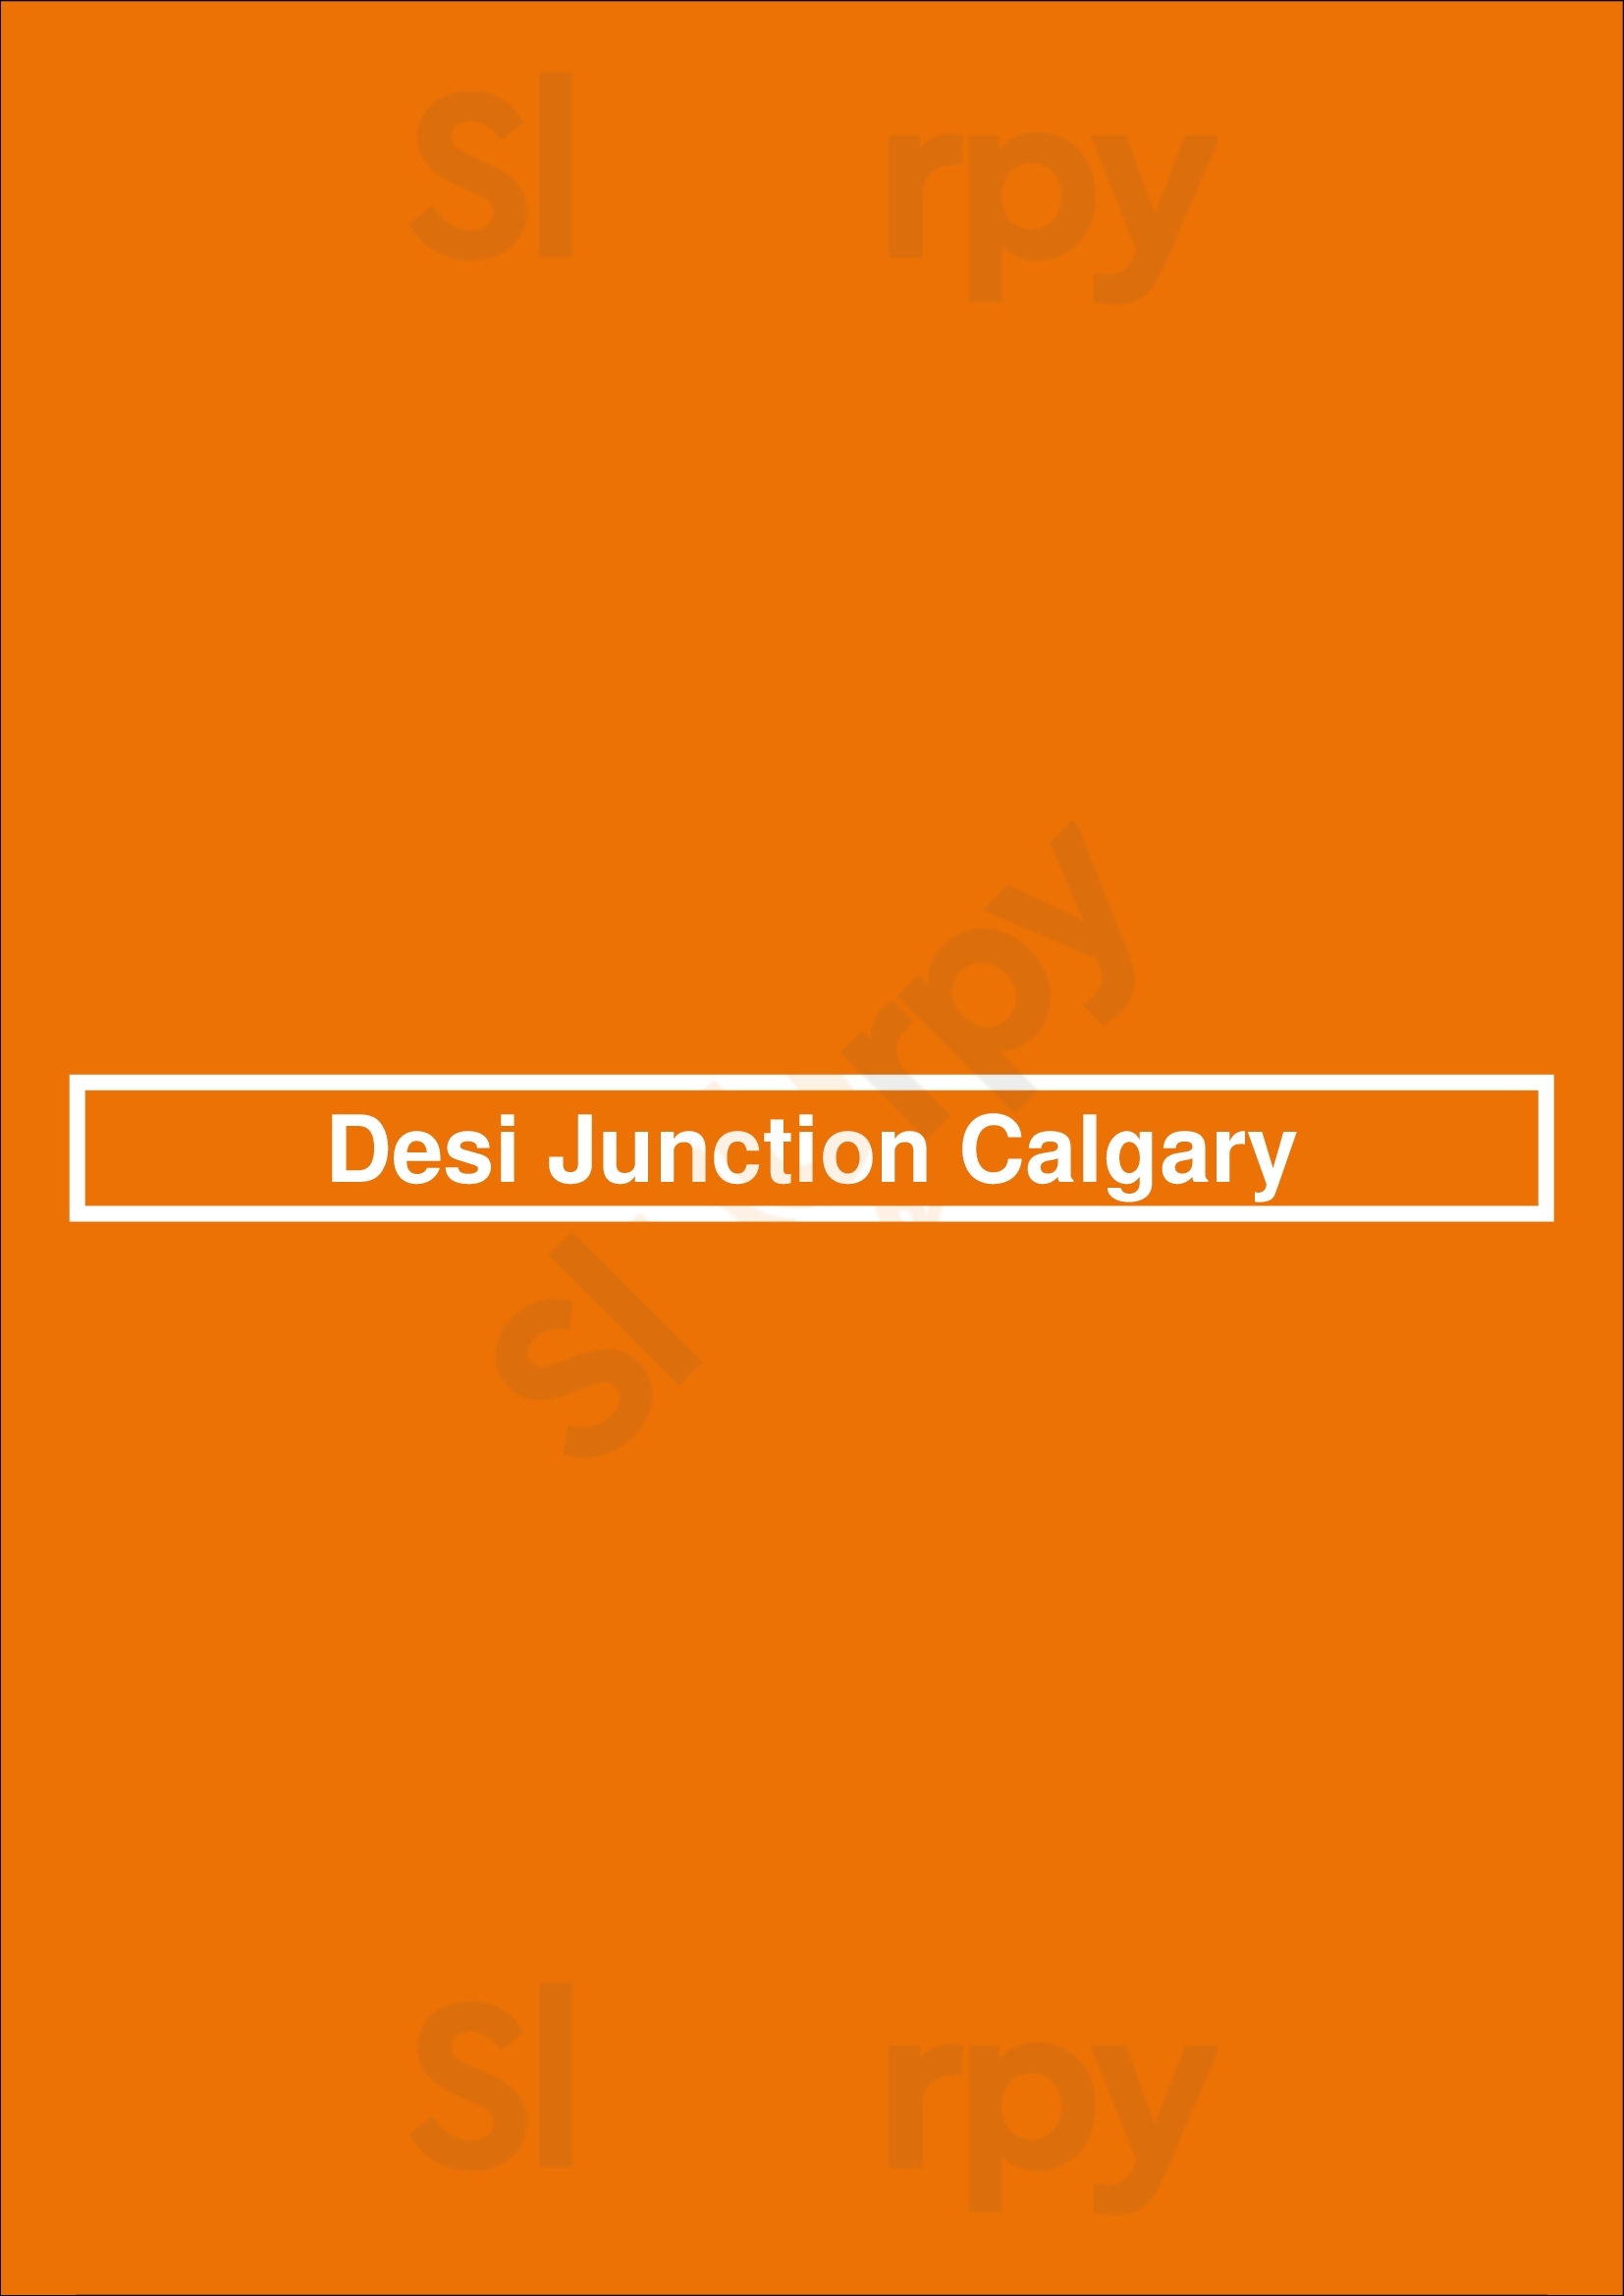 Desi Junction Calgary Calgary Menu - 1